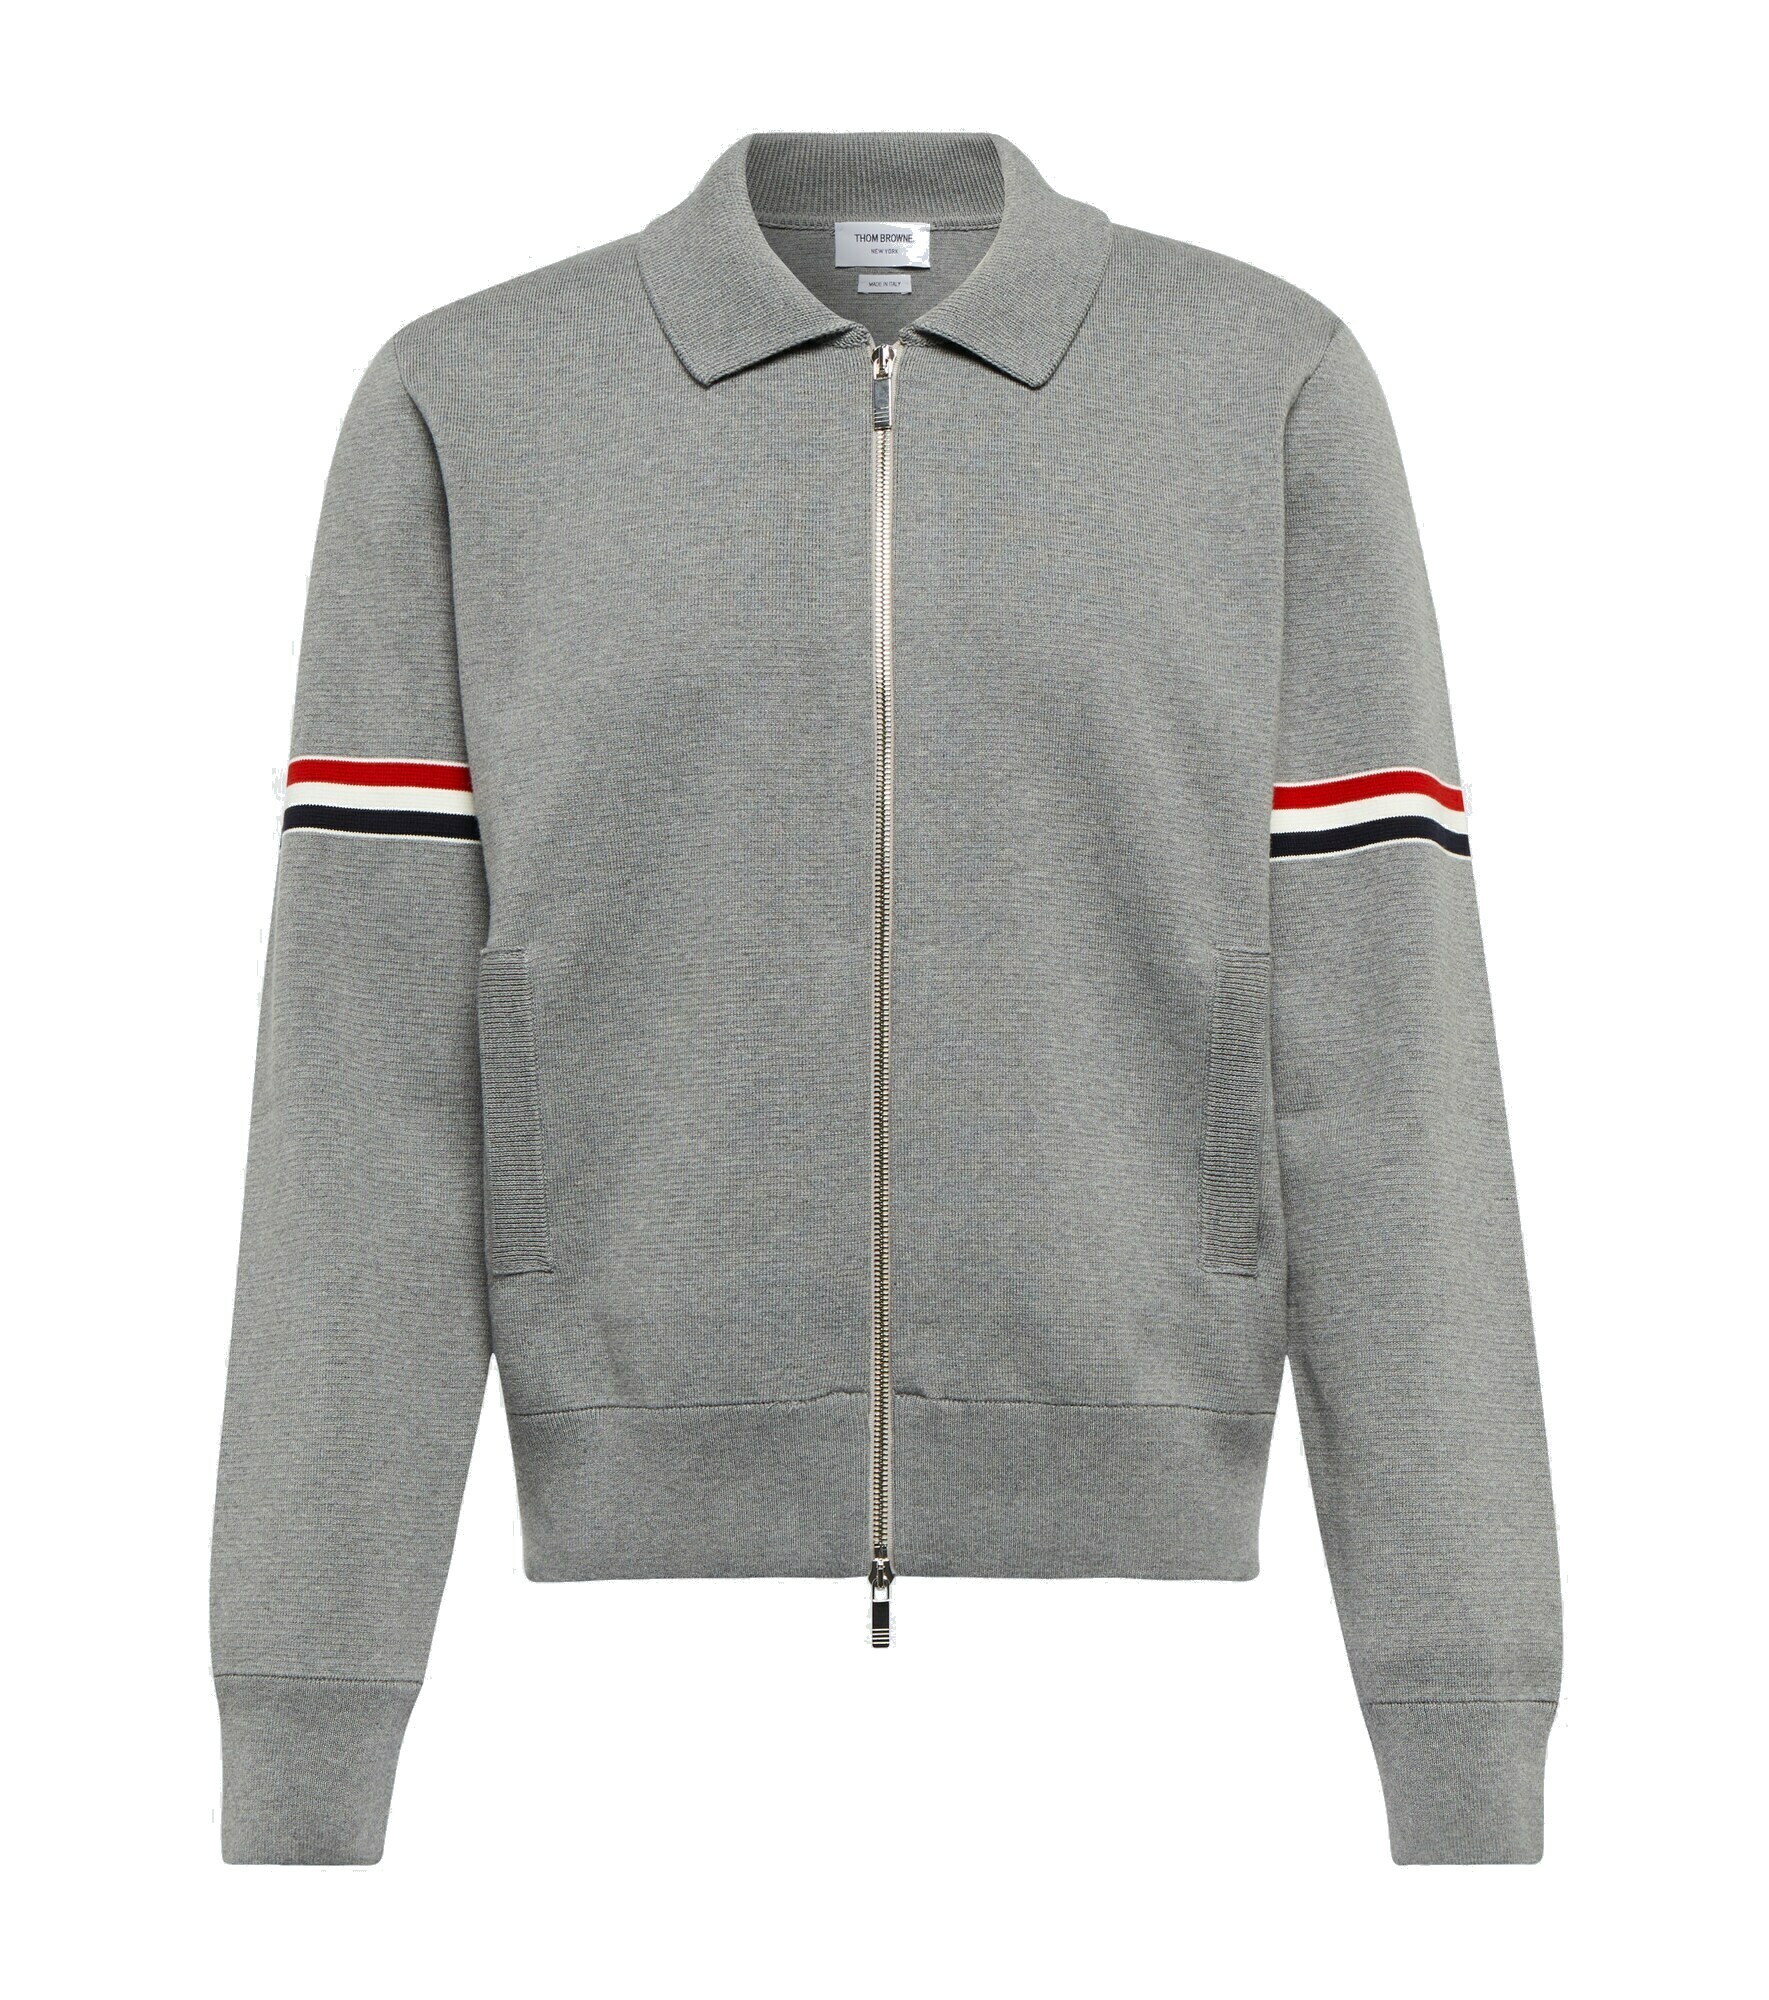 Thom Browne - Cotton-blend zip-up sweater Thom Browne